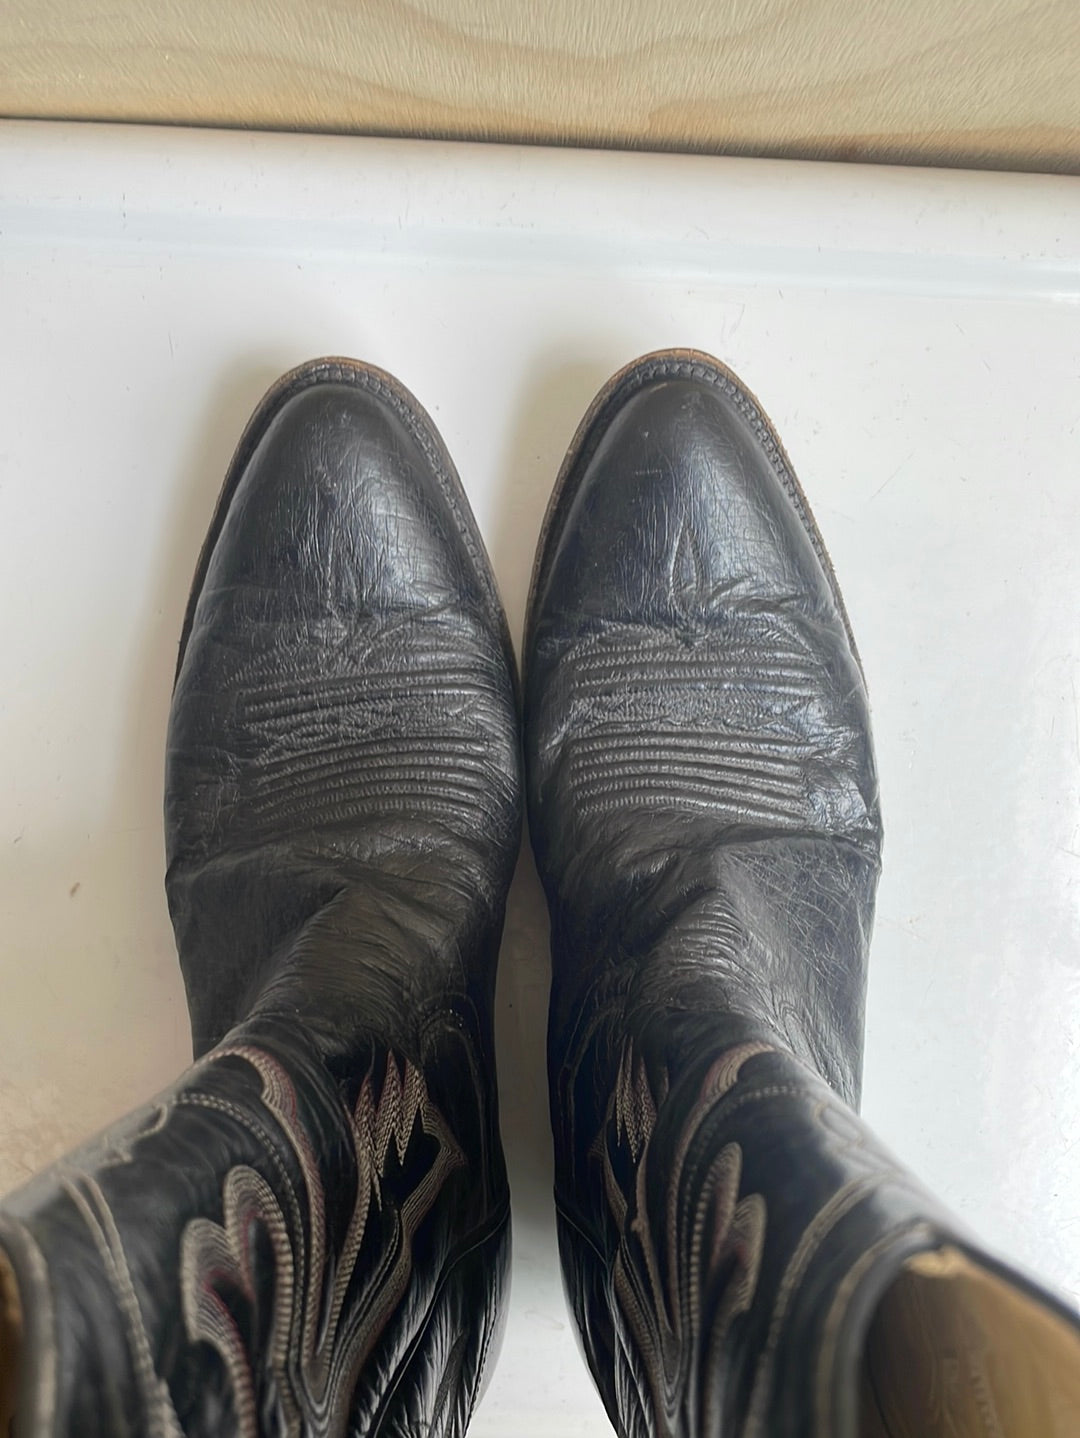 Black Leather Panhandle Slim Boots